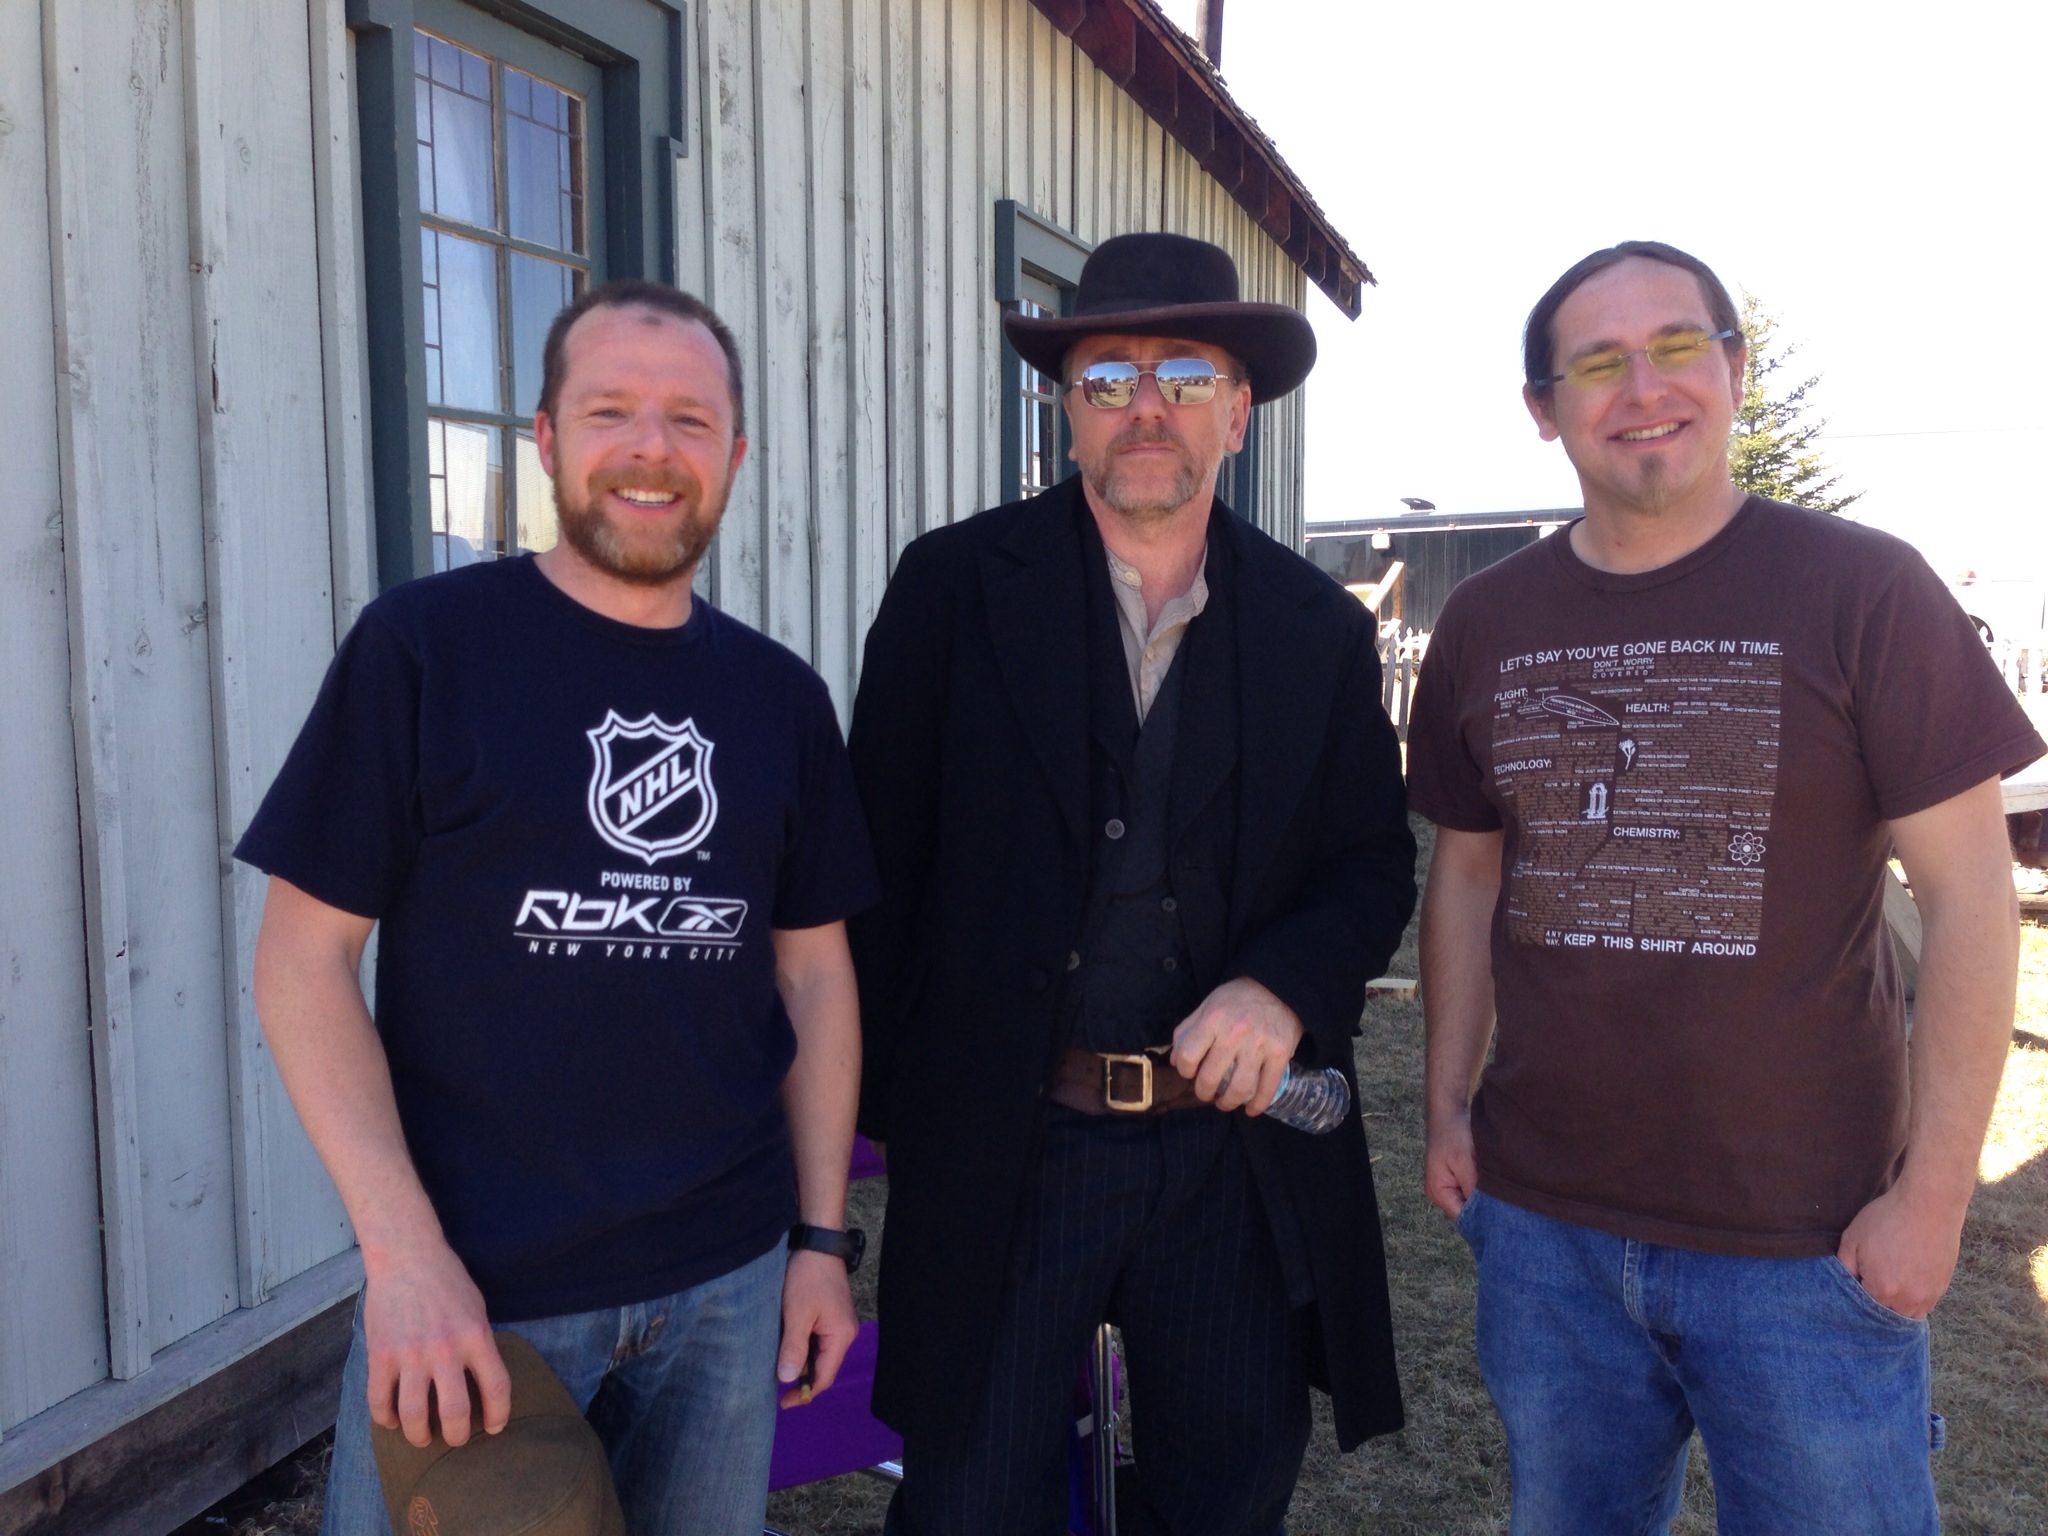 Gary Lorimer, Tim Roth, Garth Whelen on the set of Klondike. - May 2013